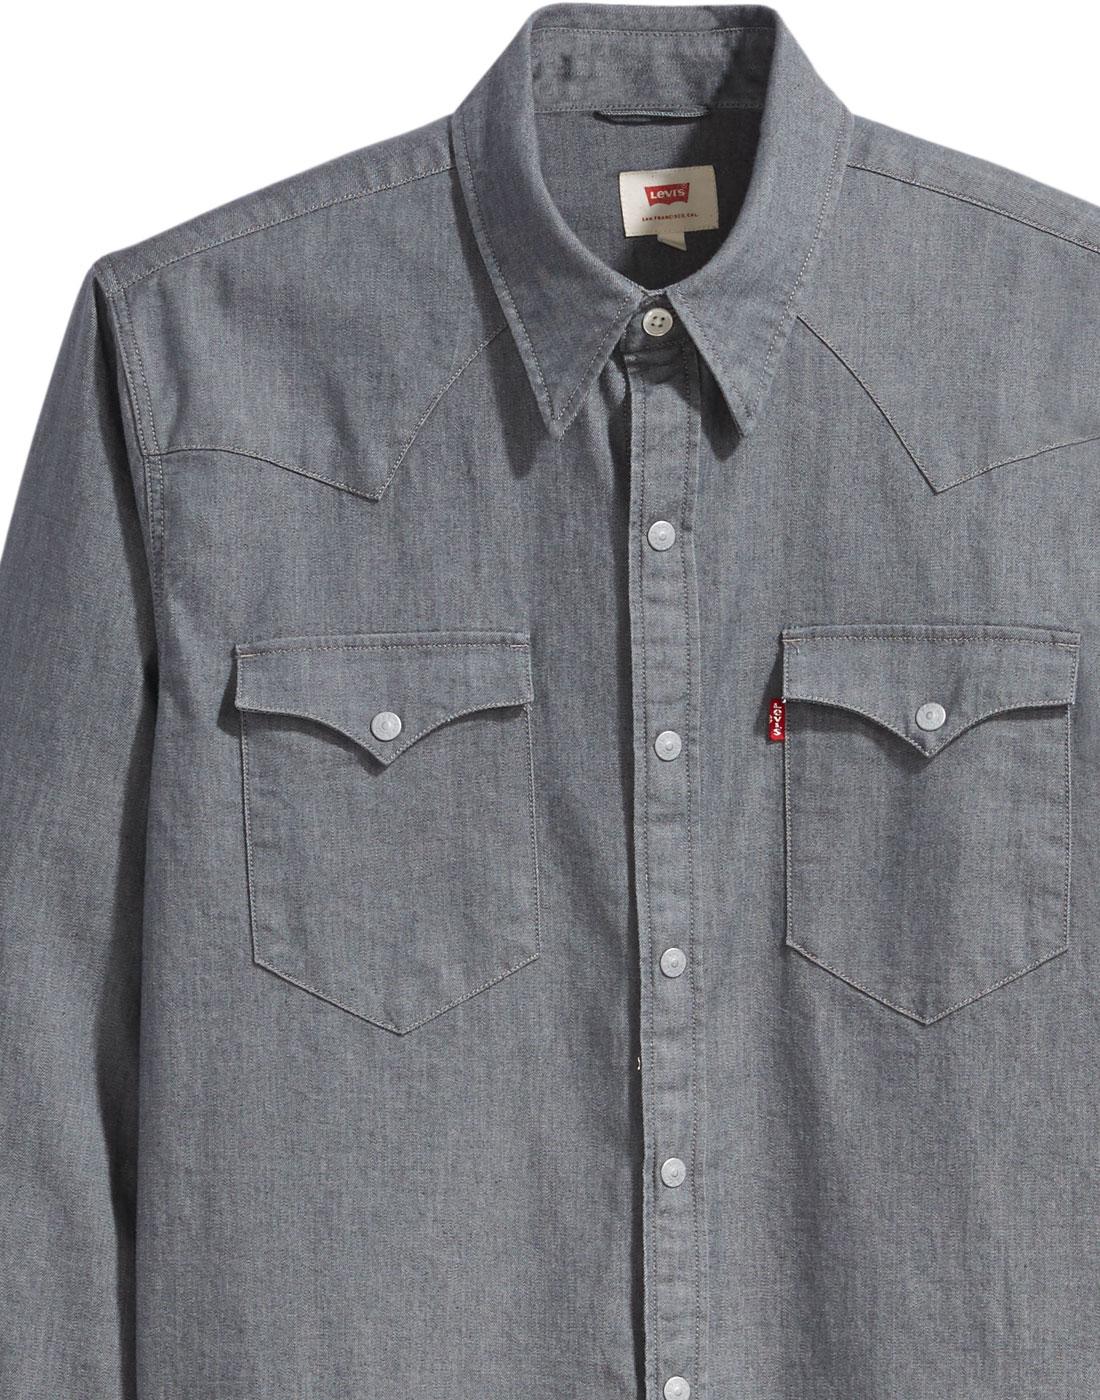 LEVI'S Barstow Retro Denim Western Shirt Grey Stretch Rinse